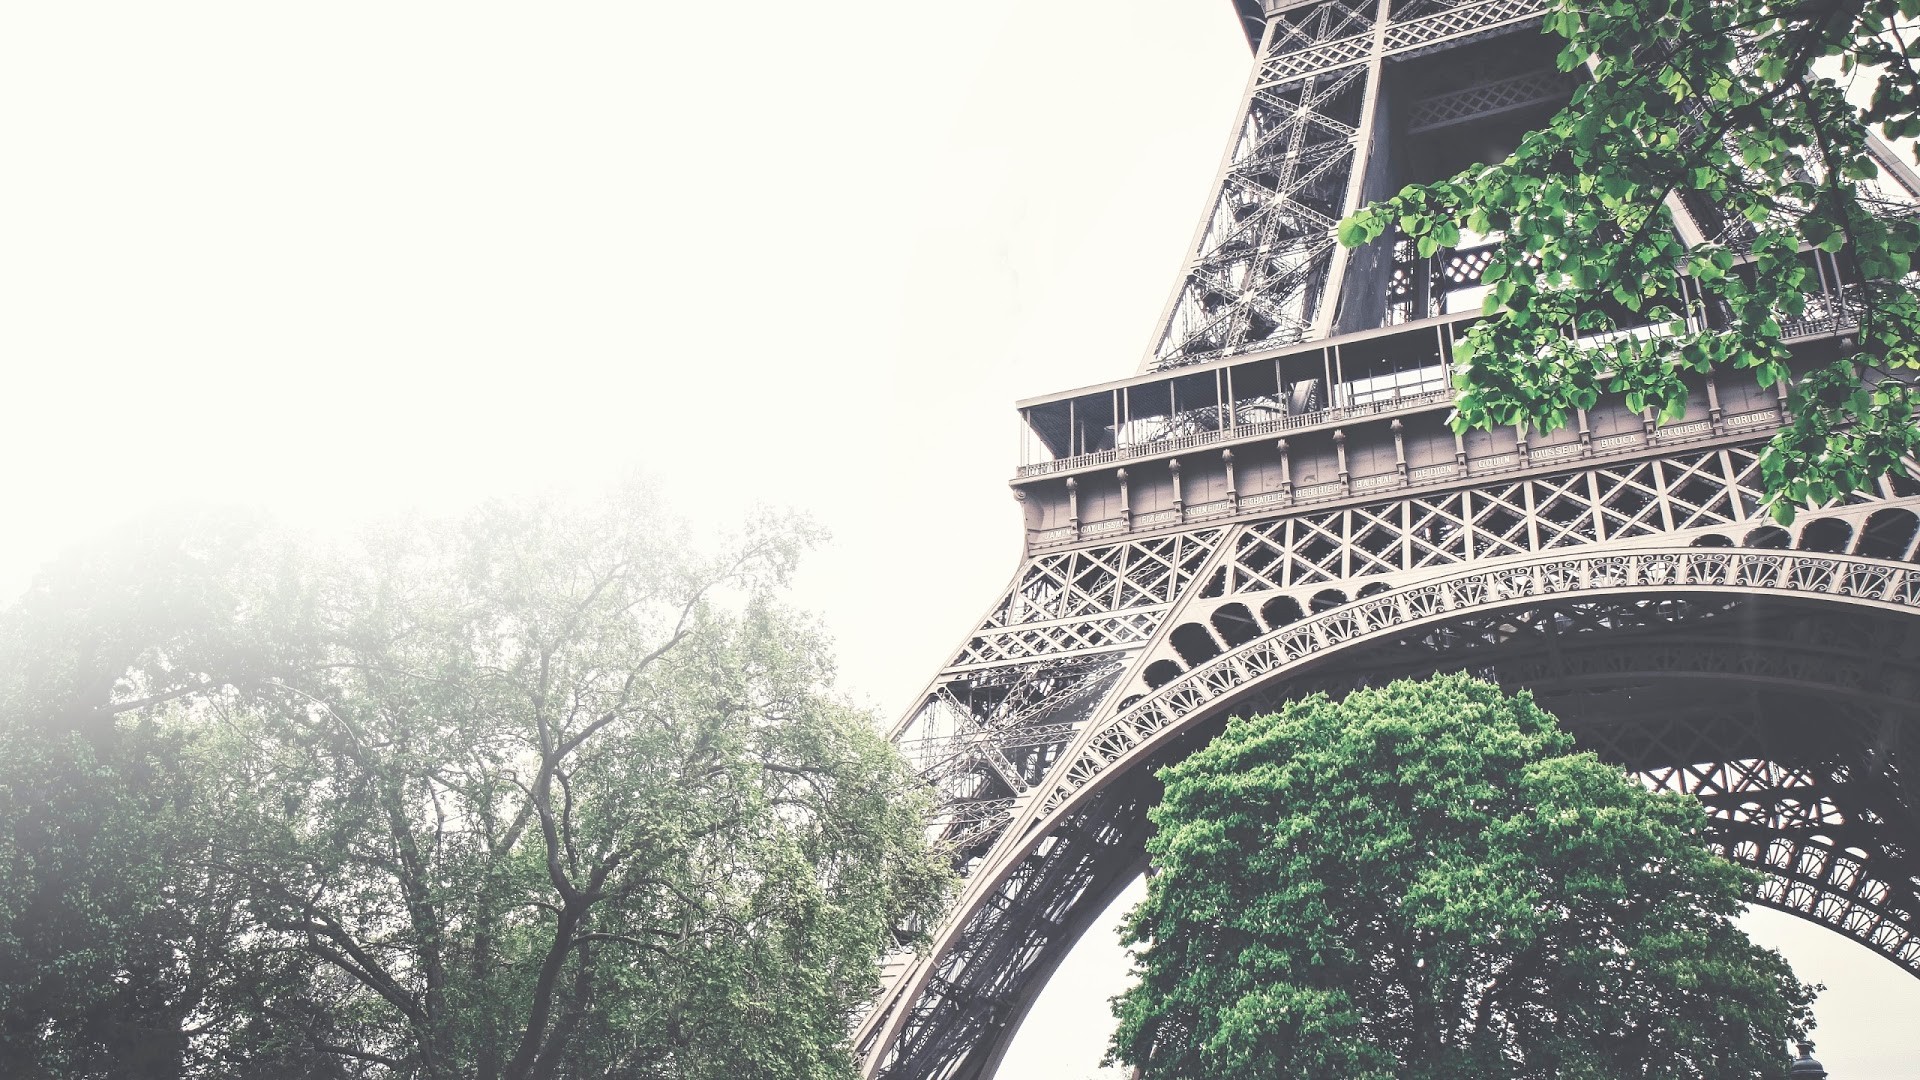 General 1920x1080 Eiffel Tower Paris trees architecture France landmark Europe